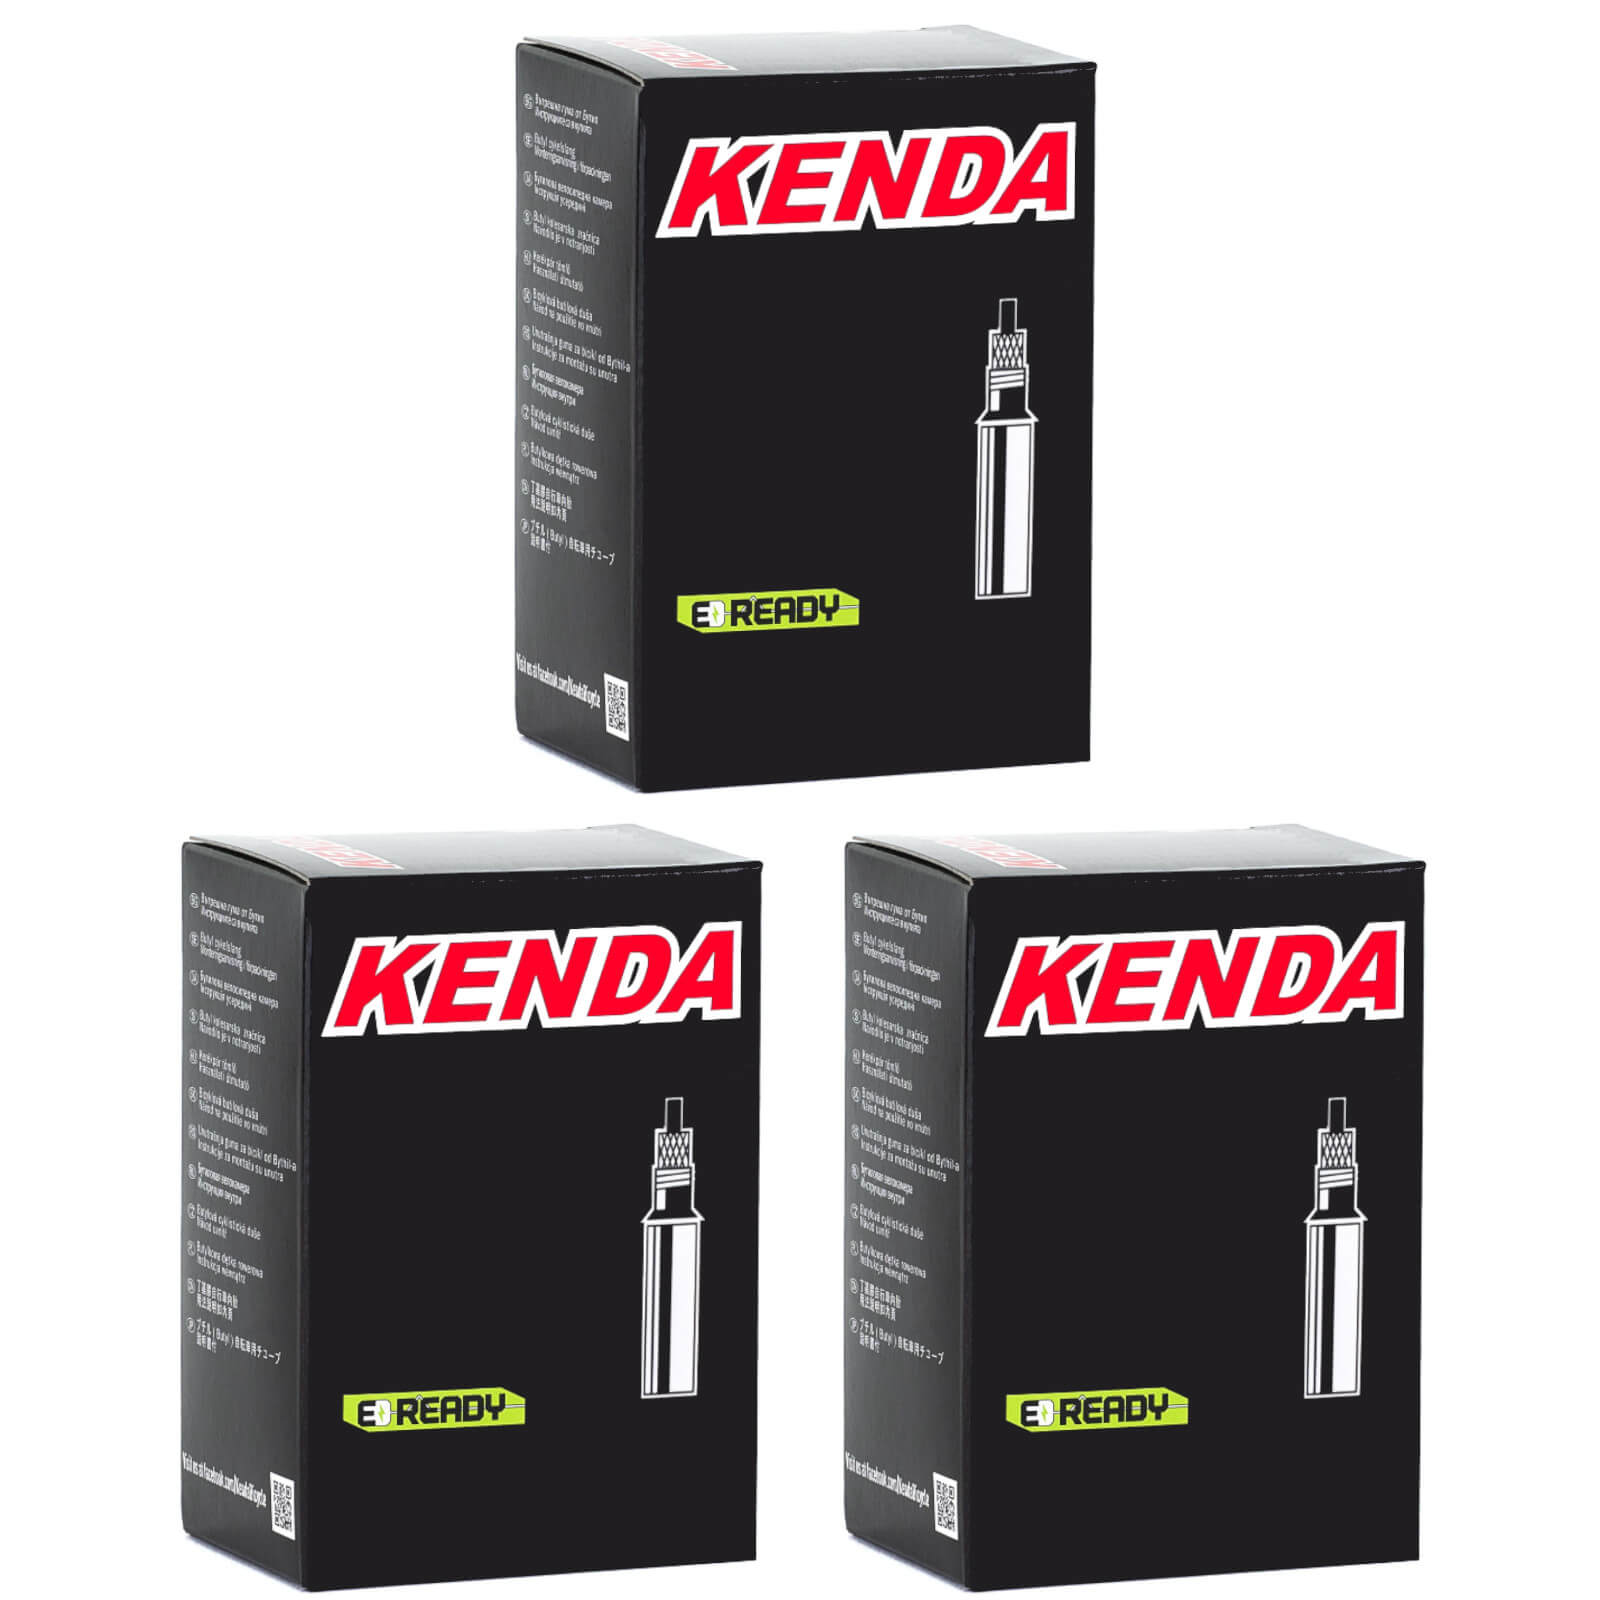 Kenda 27.5x2.0-2.4" 27.5 Inch Presta Valve Bike Inner Tube Pack of 3